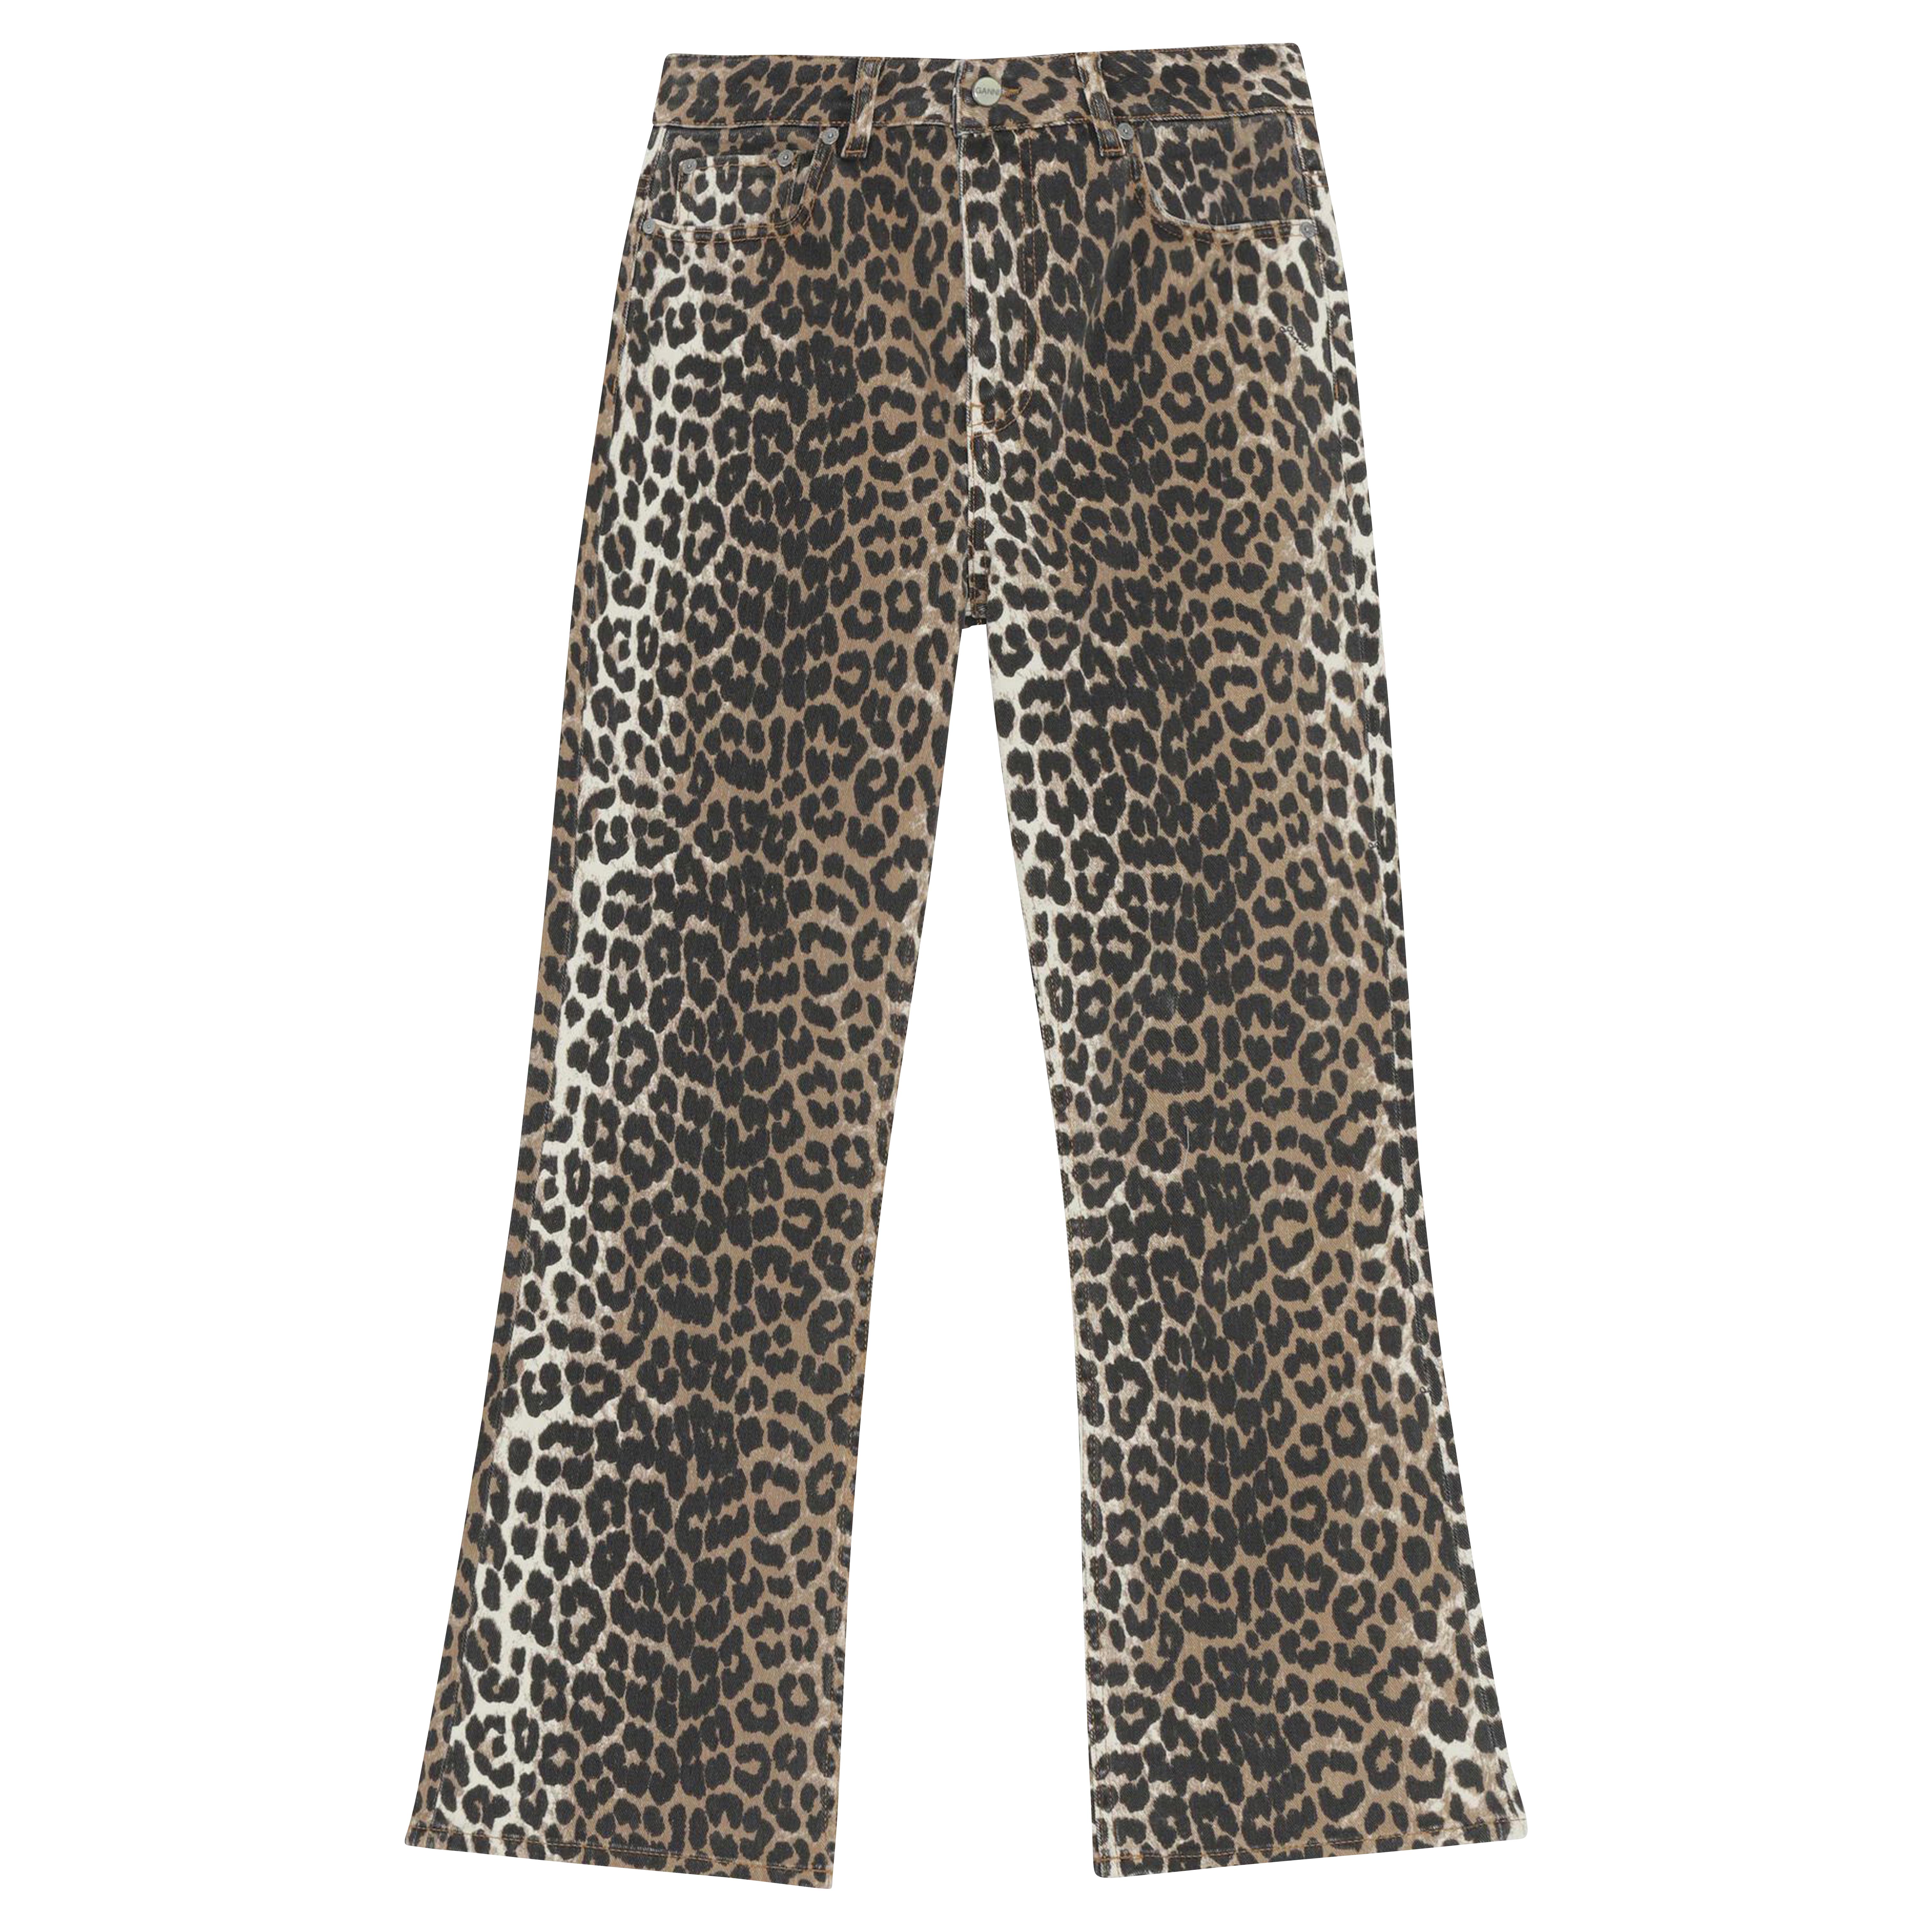 Ganni Betzy Cropped Jeans in Leopard 29